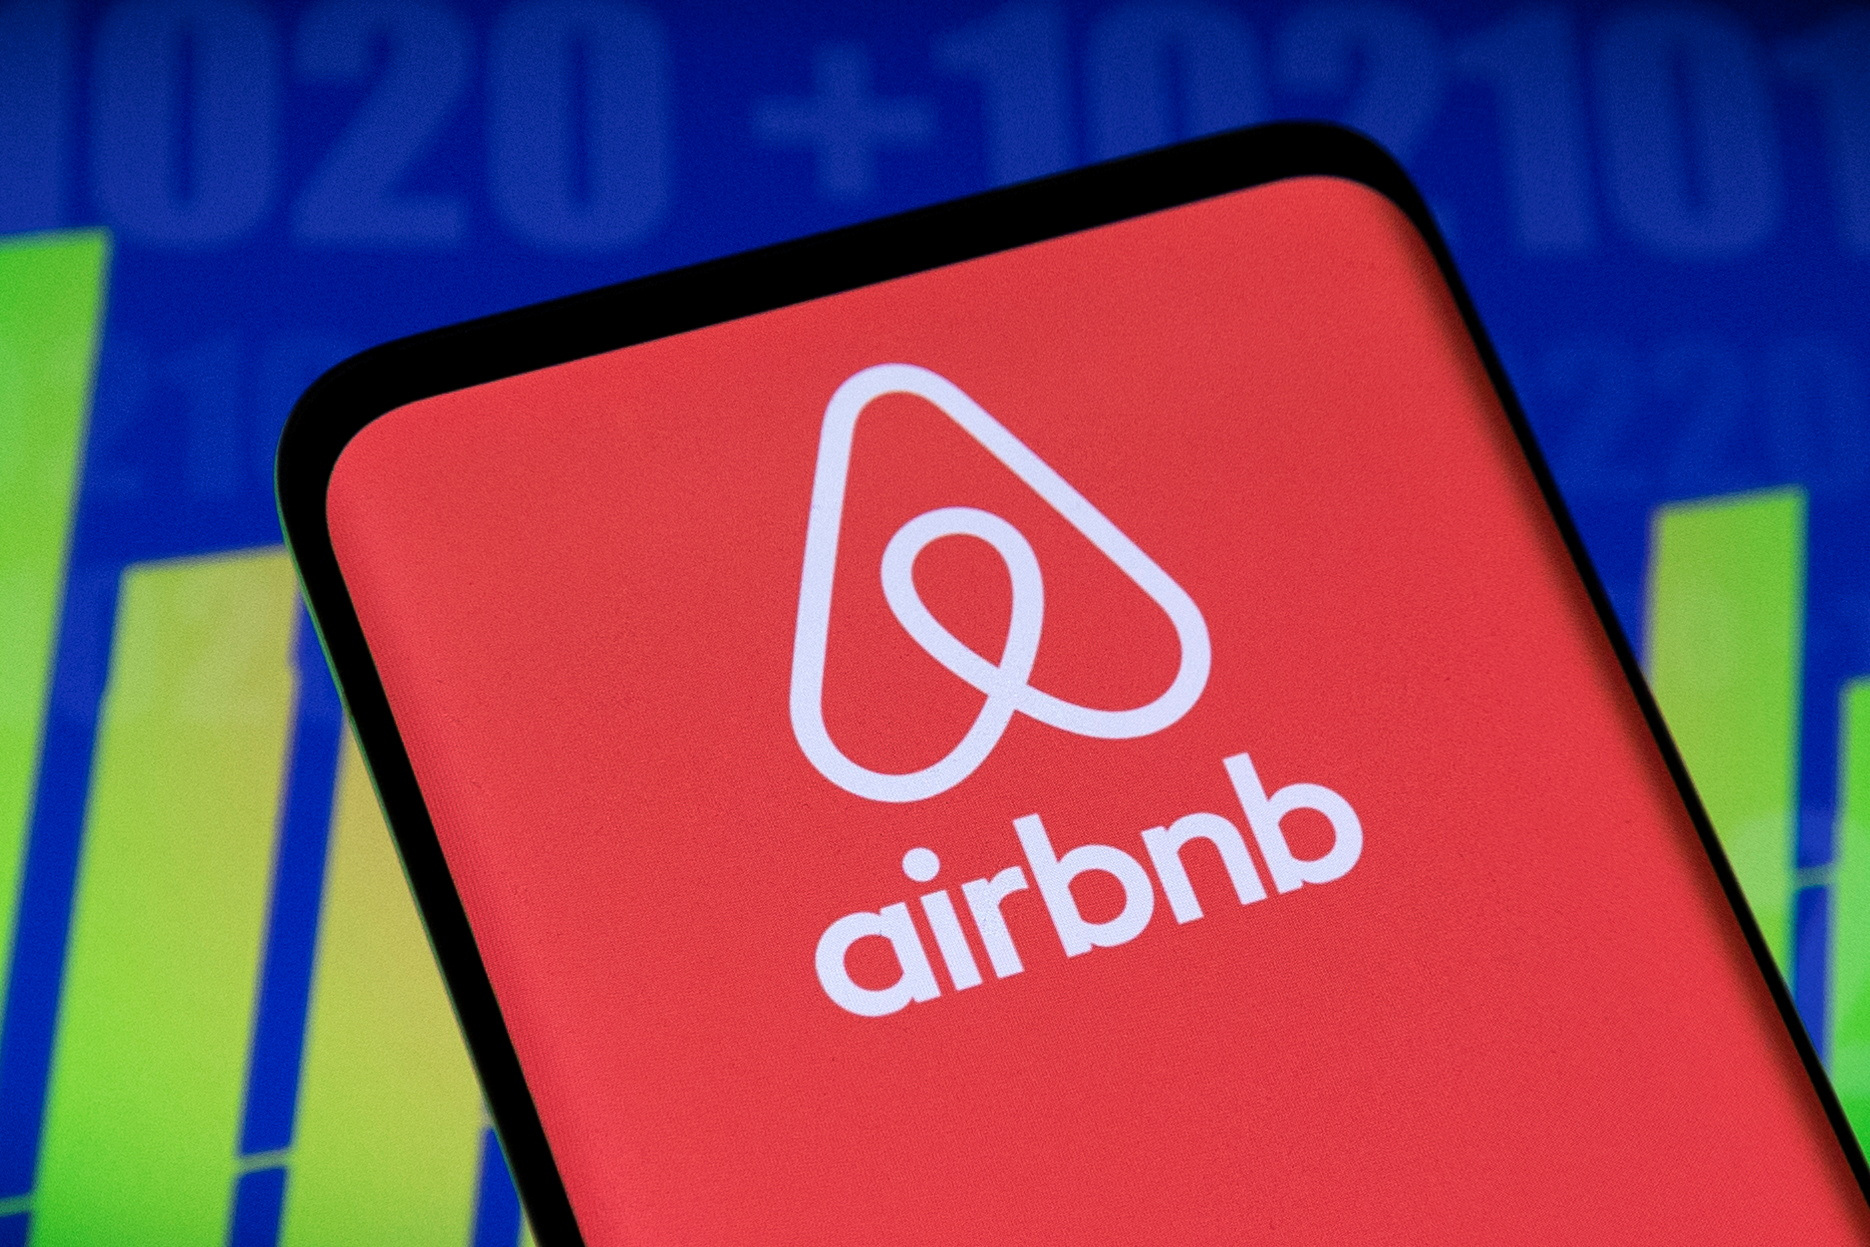 Illustration shows Airbnb logo